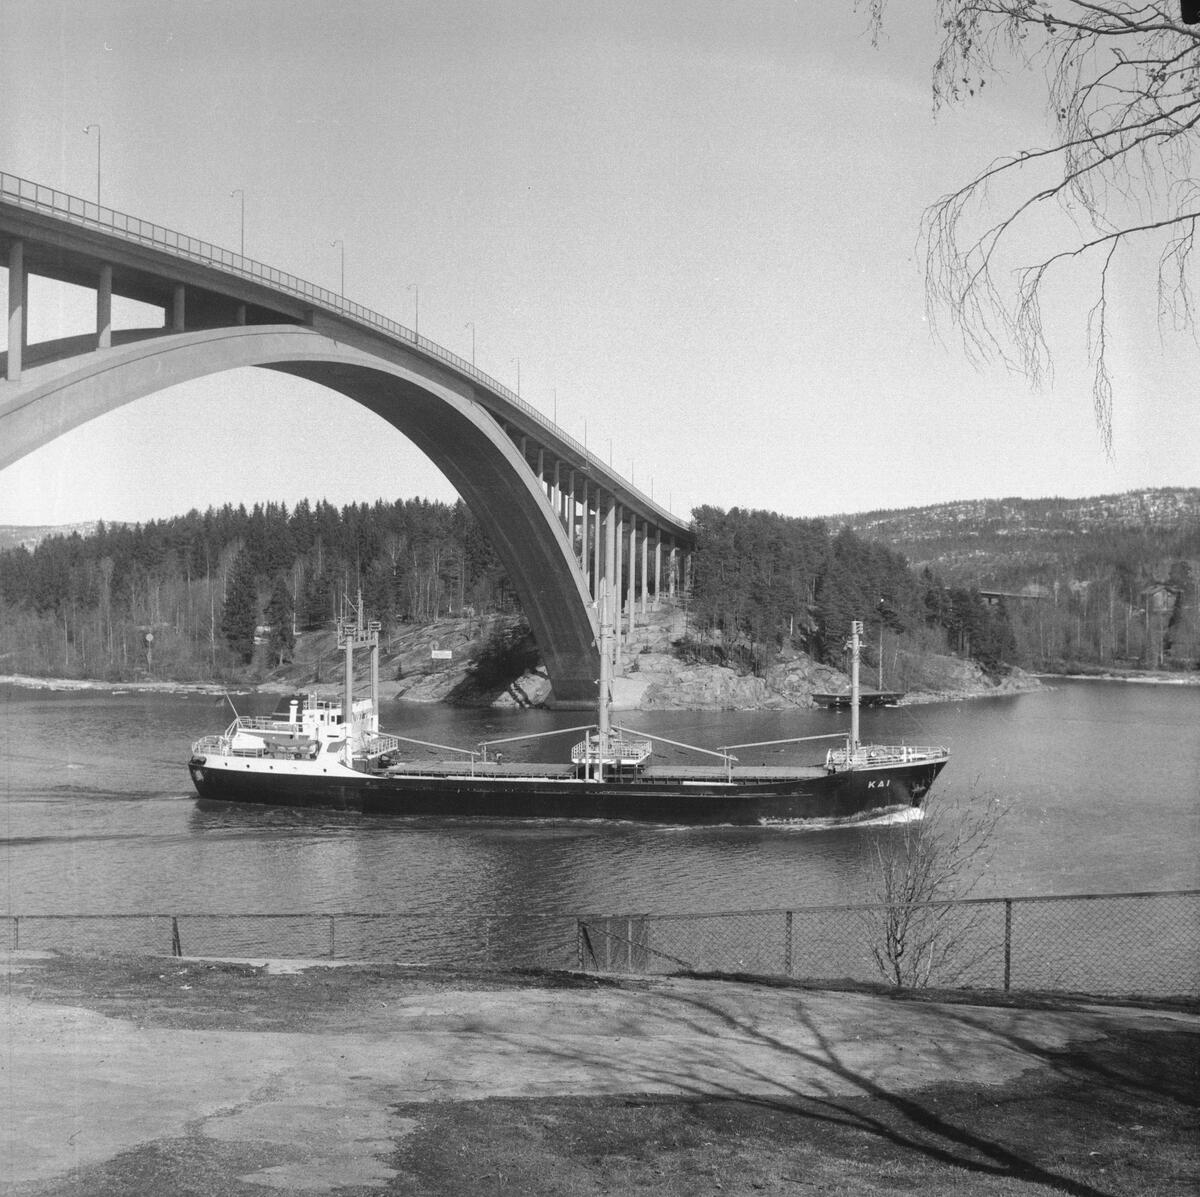 Fartyget Kai vid Sandöbron

